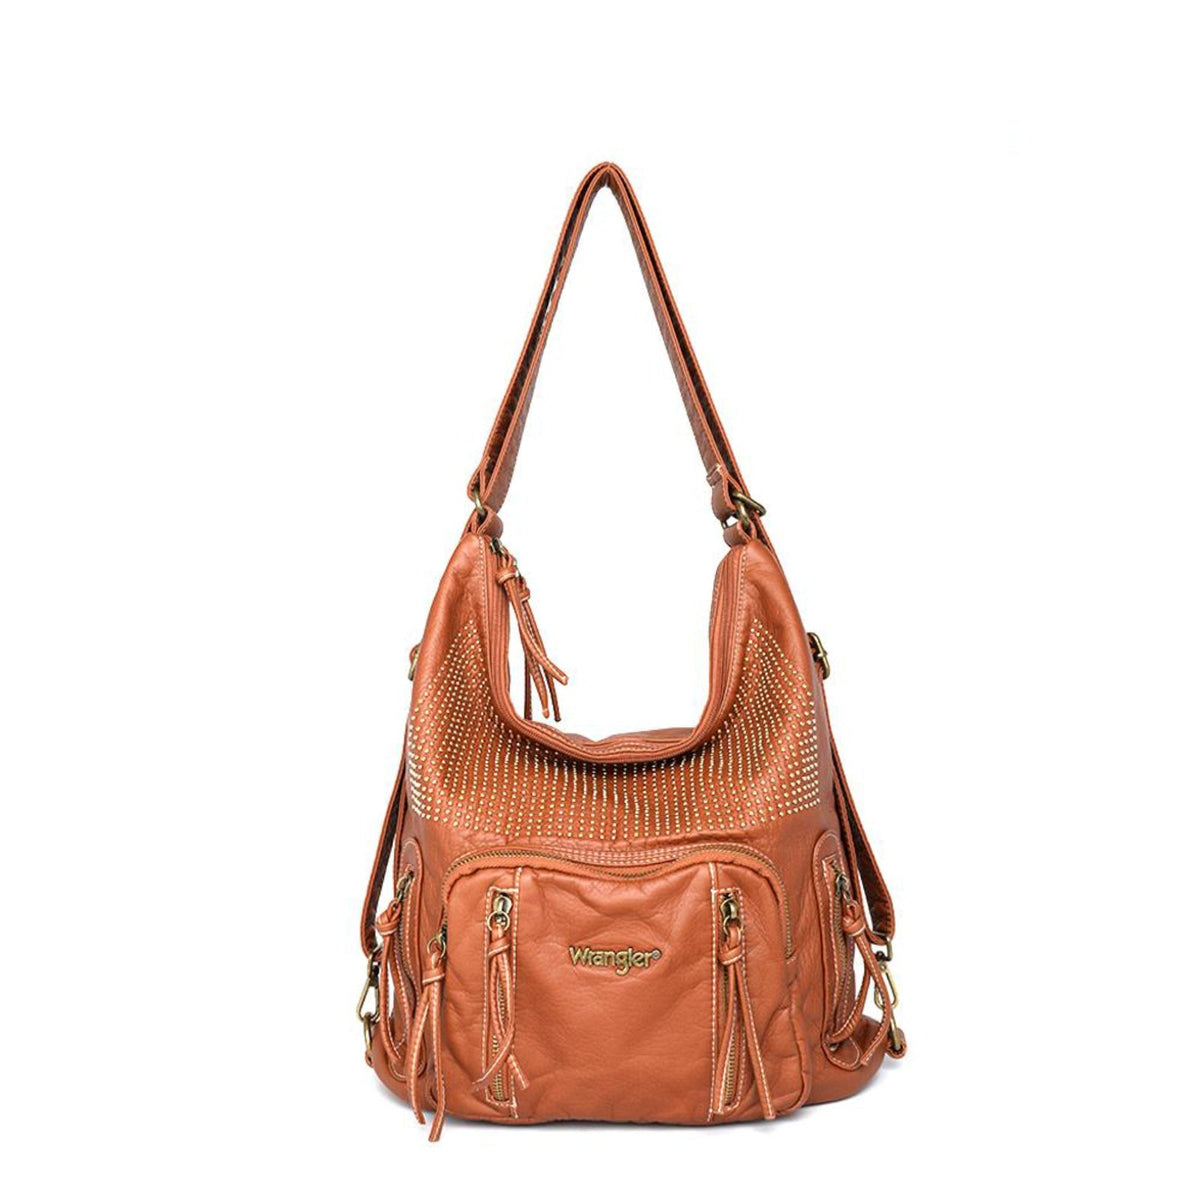 Stone Mountain Accessories, Bags, Stone Mountain Purse Handbag Pebbled  Leather Light Tan Compartments Hobo Bag